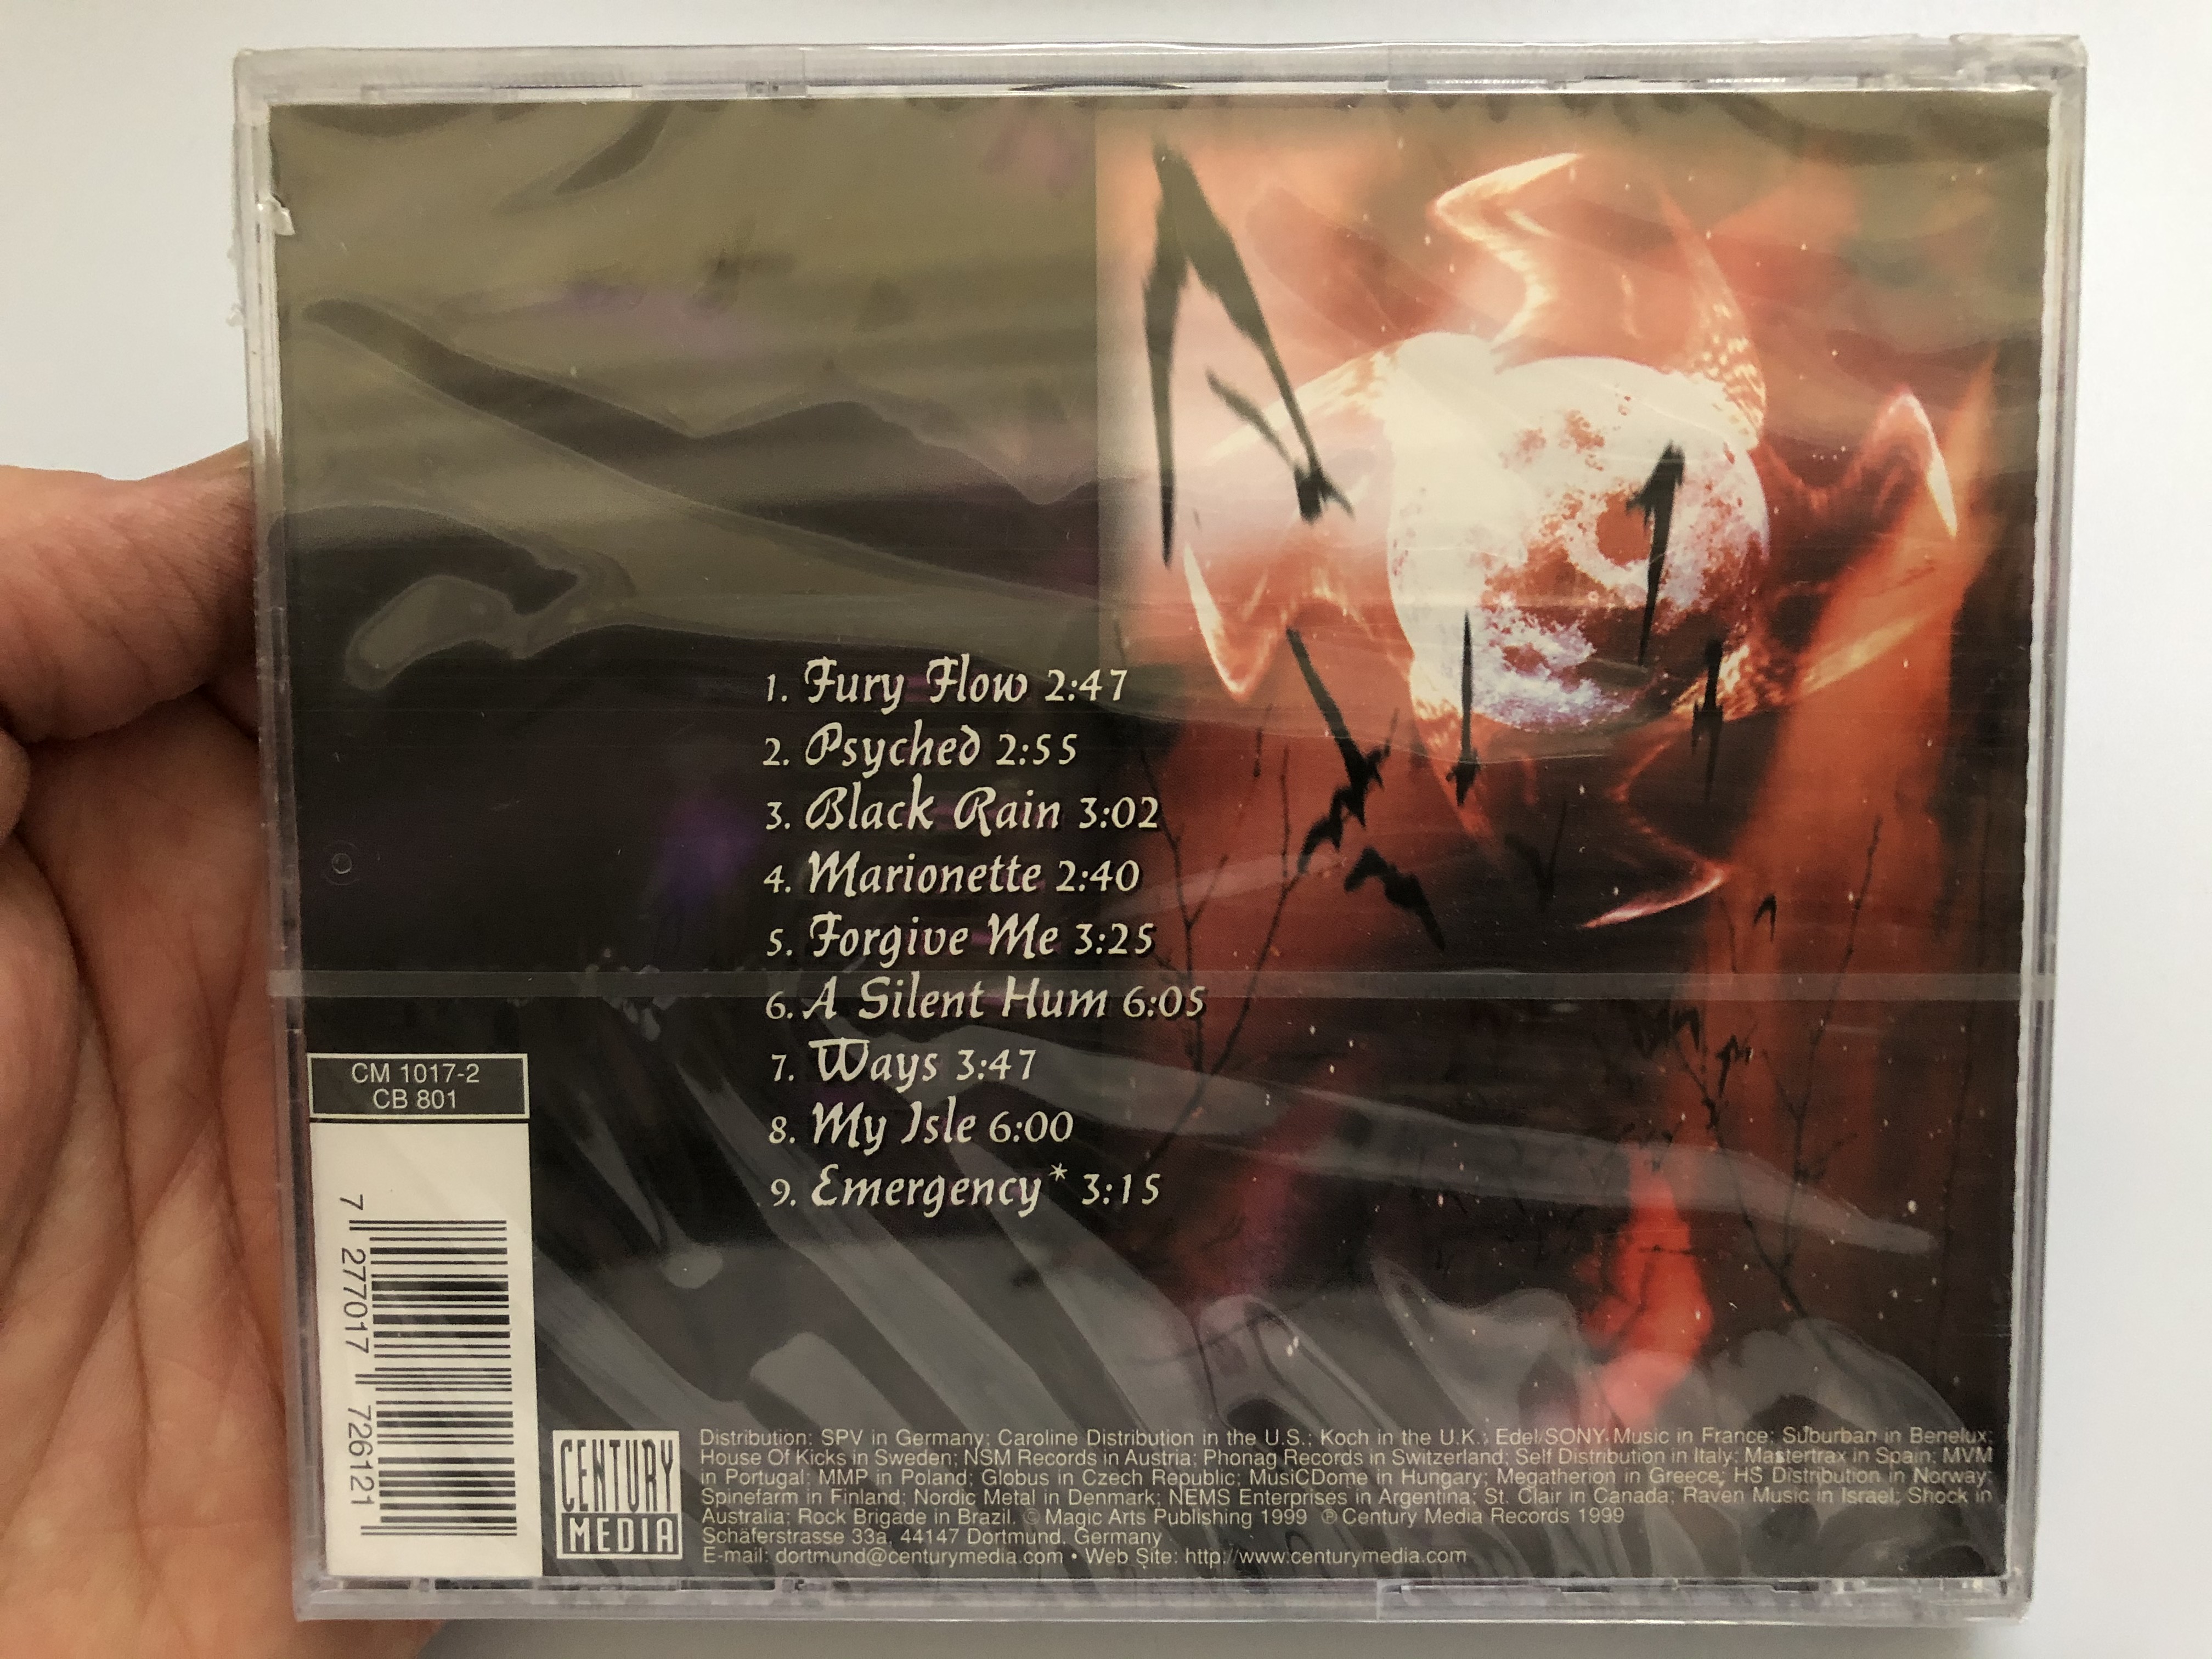 scheitan-nemesis-century-media-audio-cd-1999-77261-2-2-.jpg